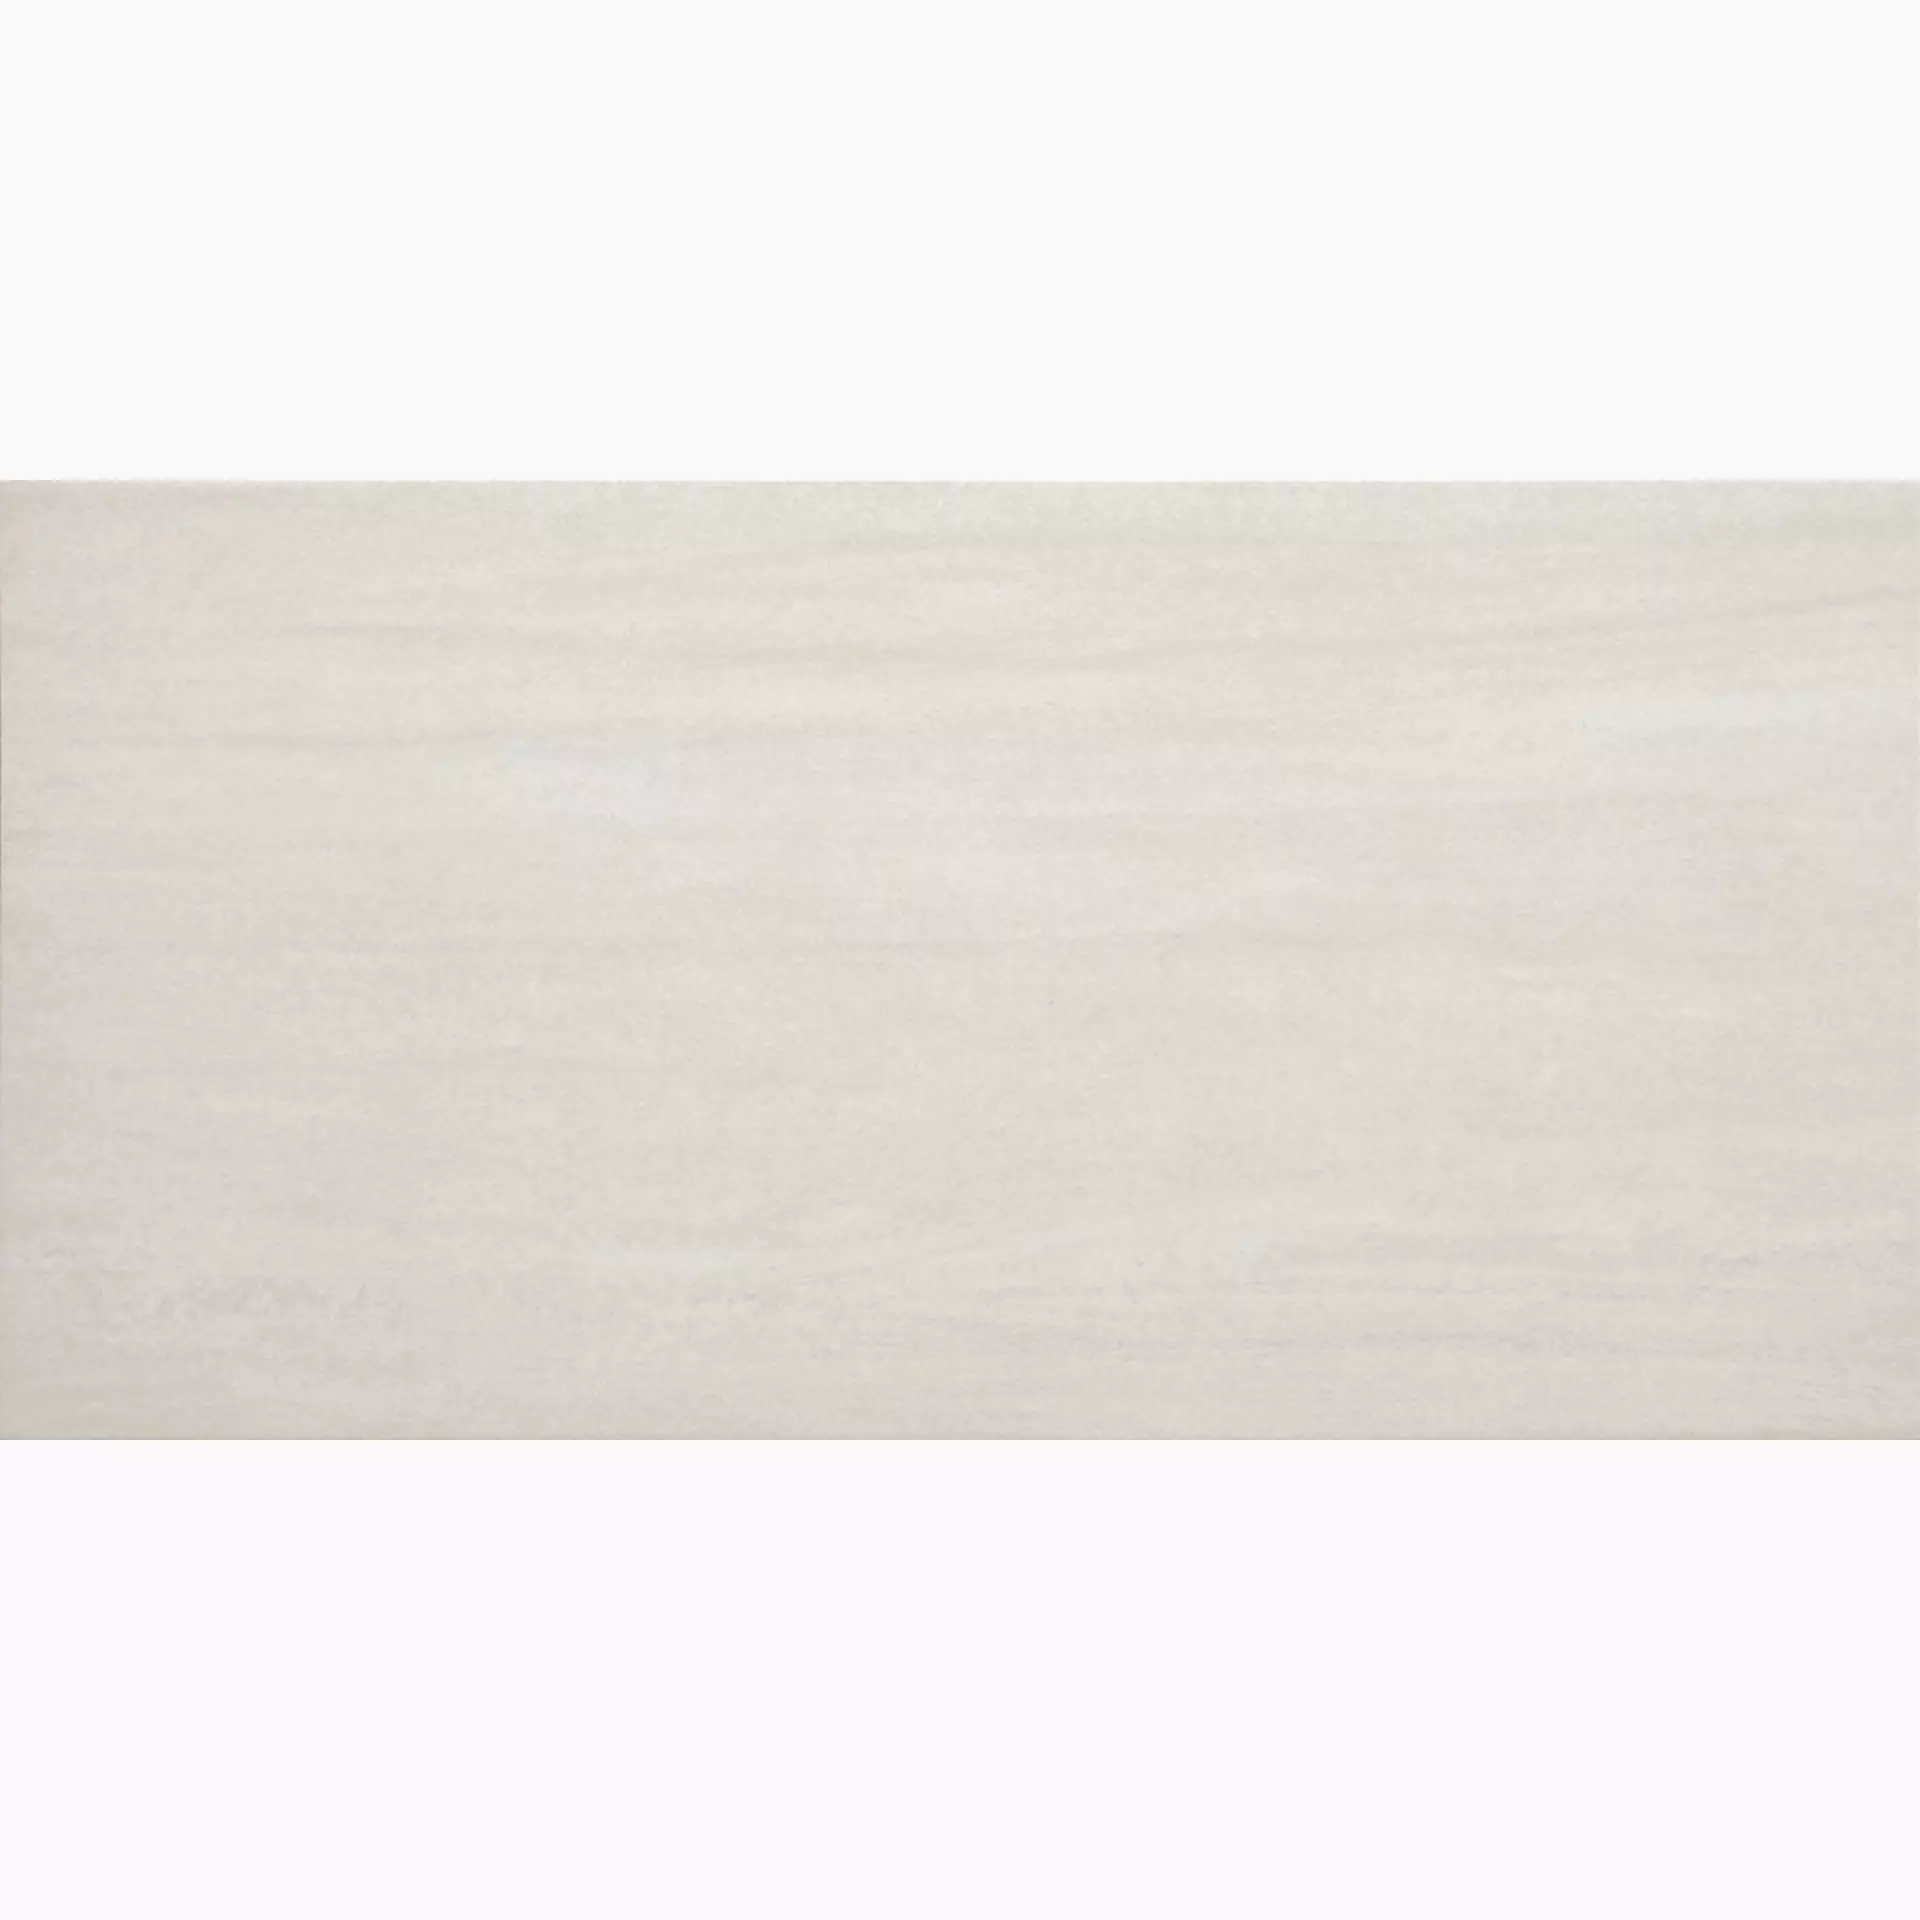 Rondine Contract White Naturale J84569 30,5x60,5cm 9,5mm